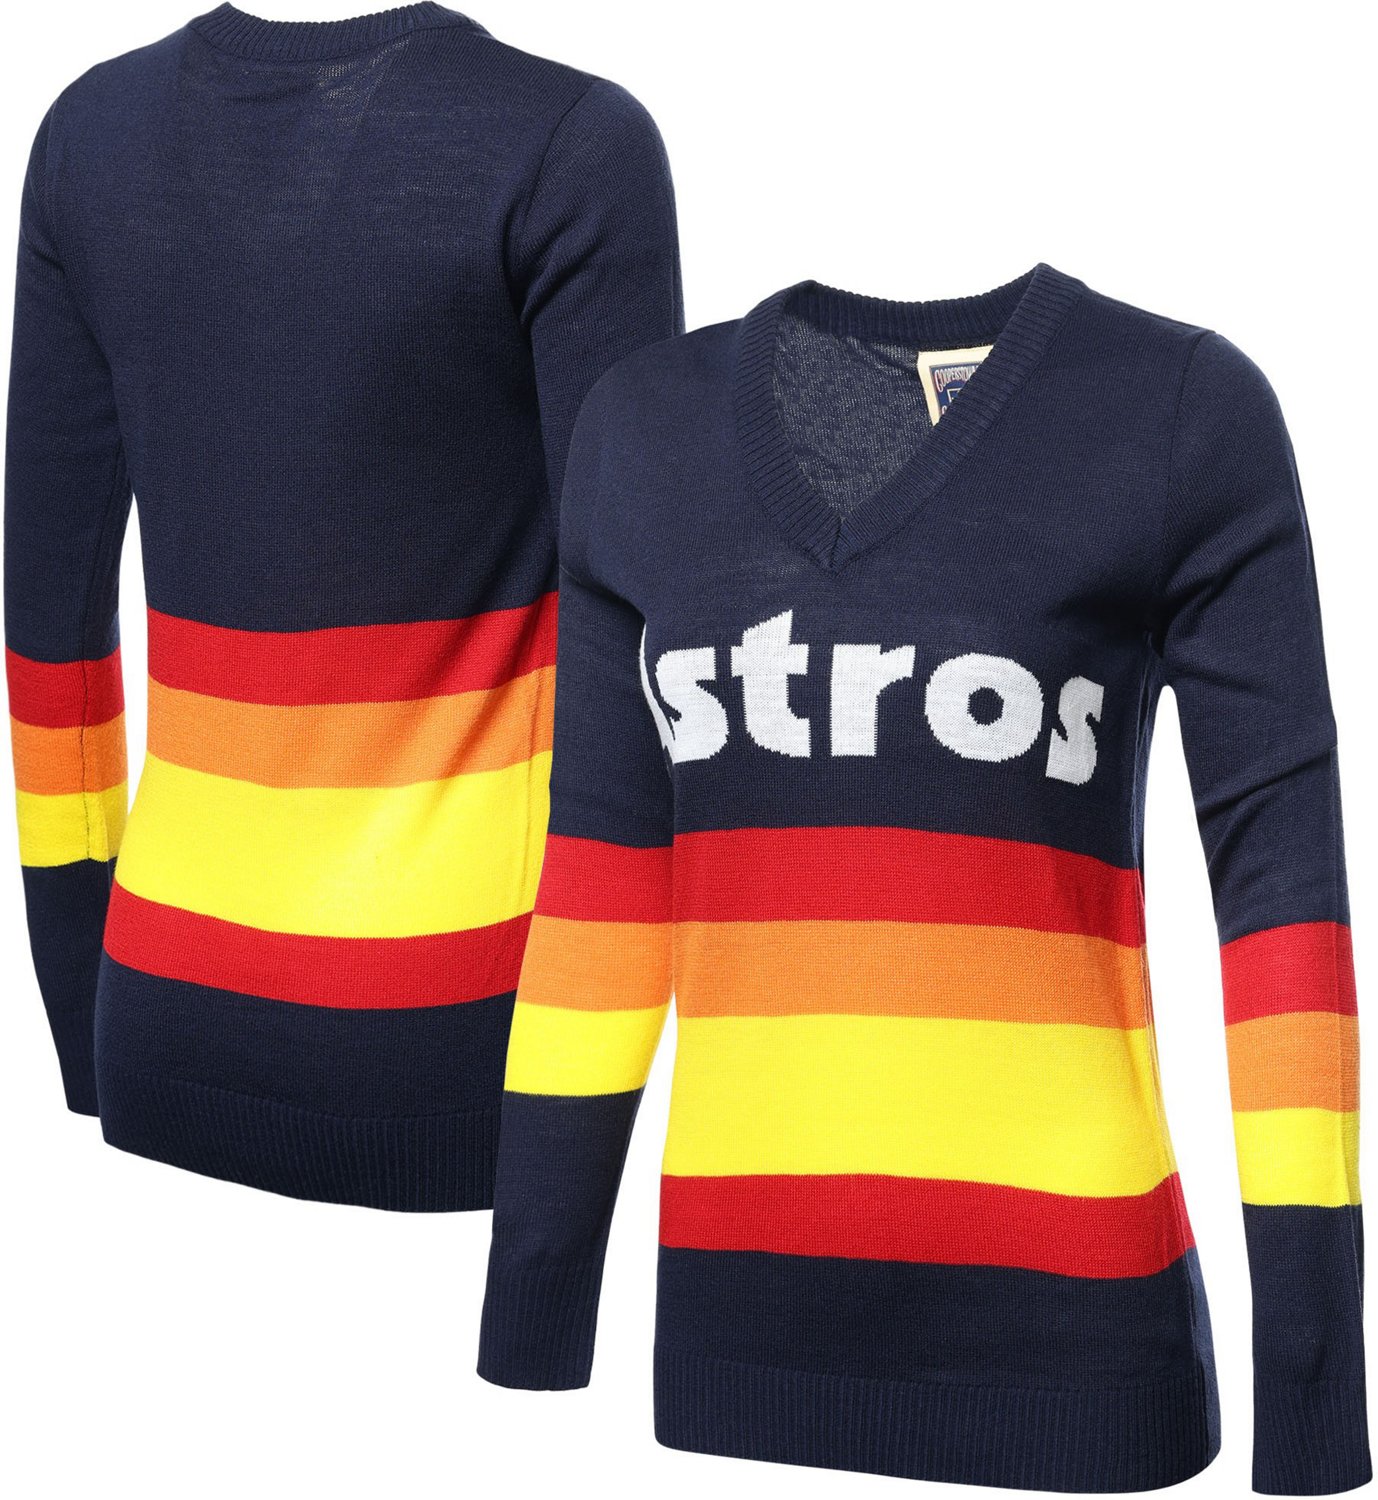 Astros Sweater 